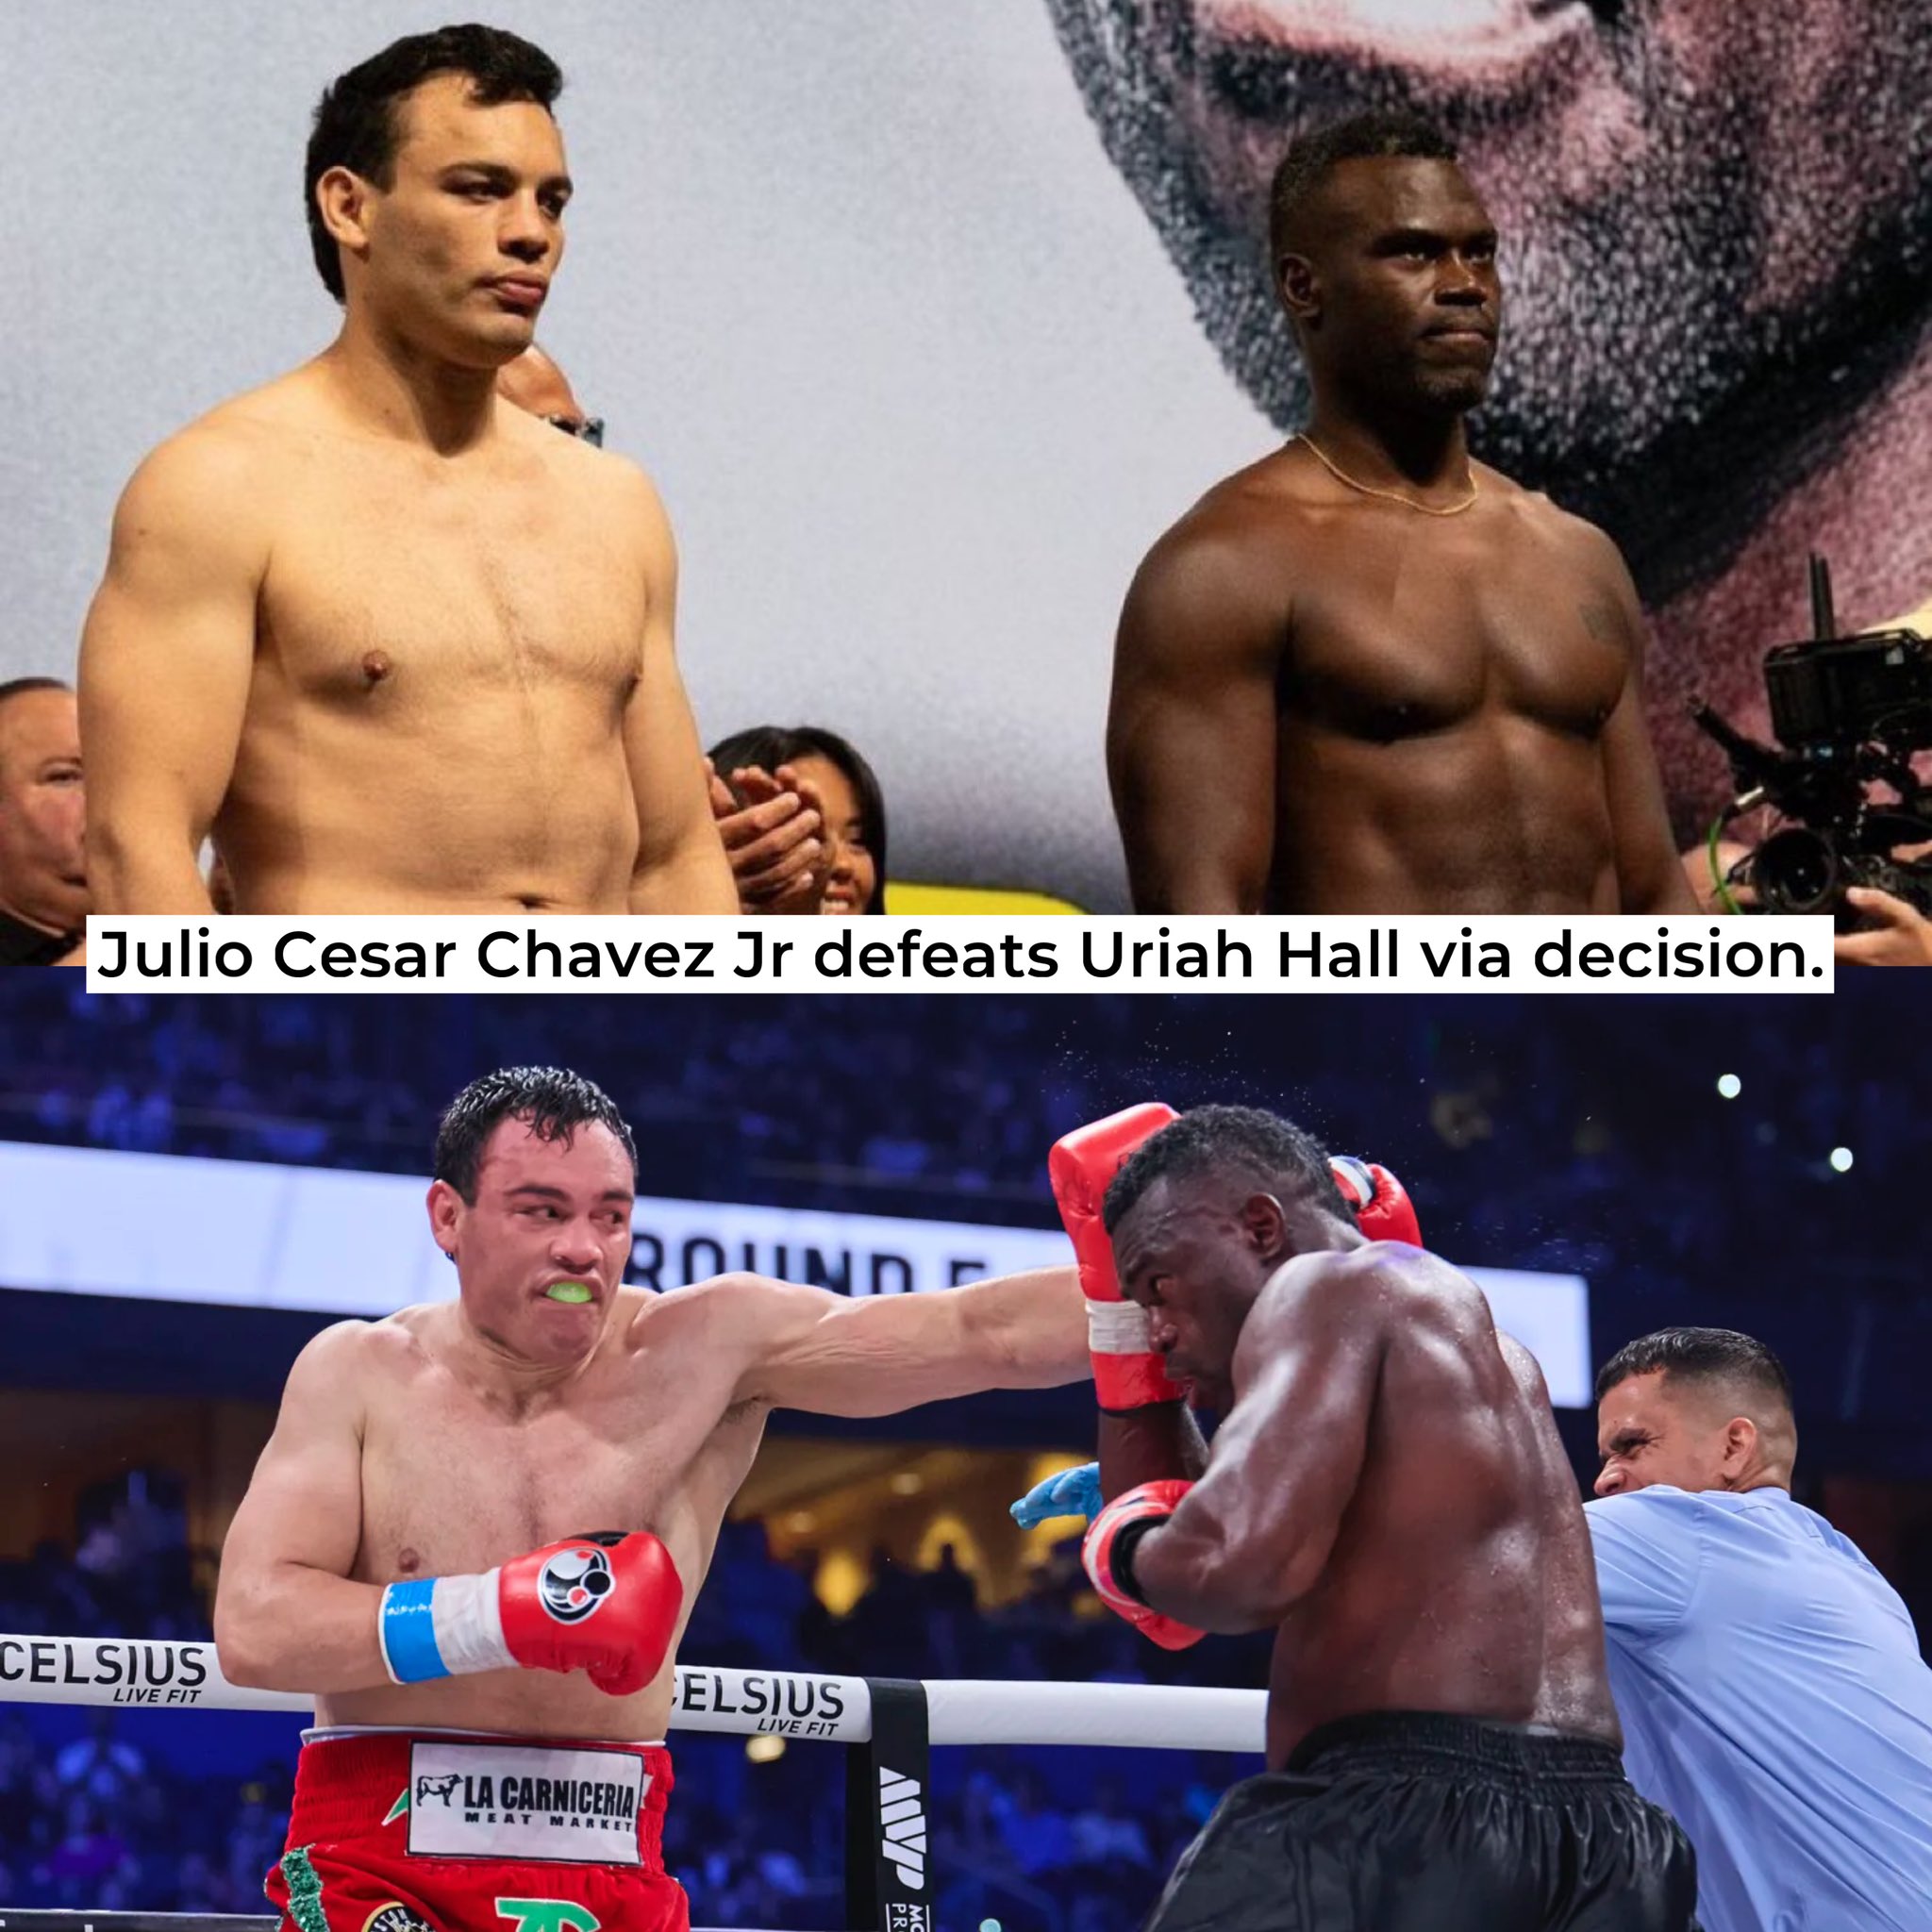 Julio César Chávez Jr. Returns To Boxing With Dominant Decision Win